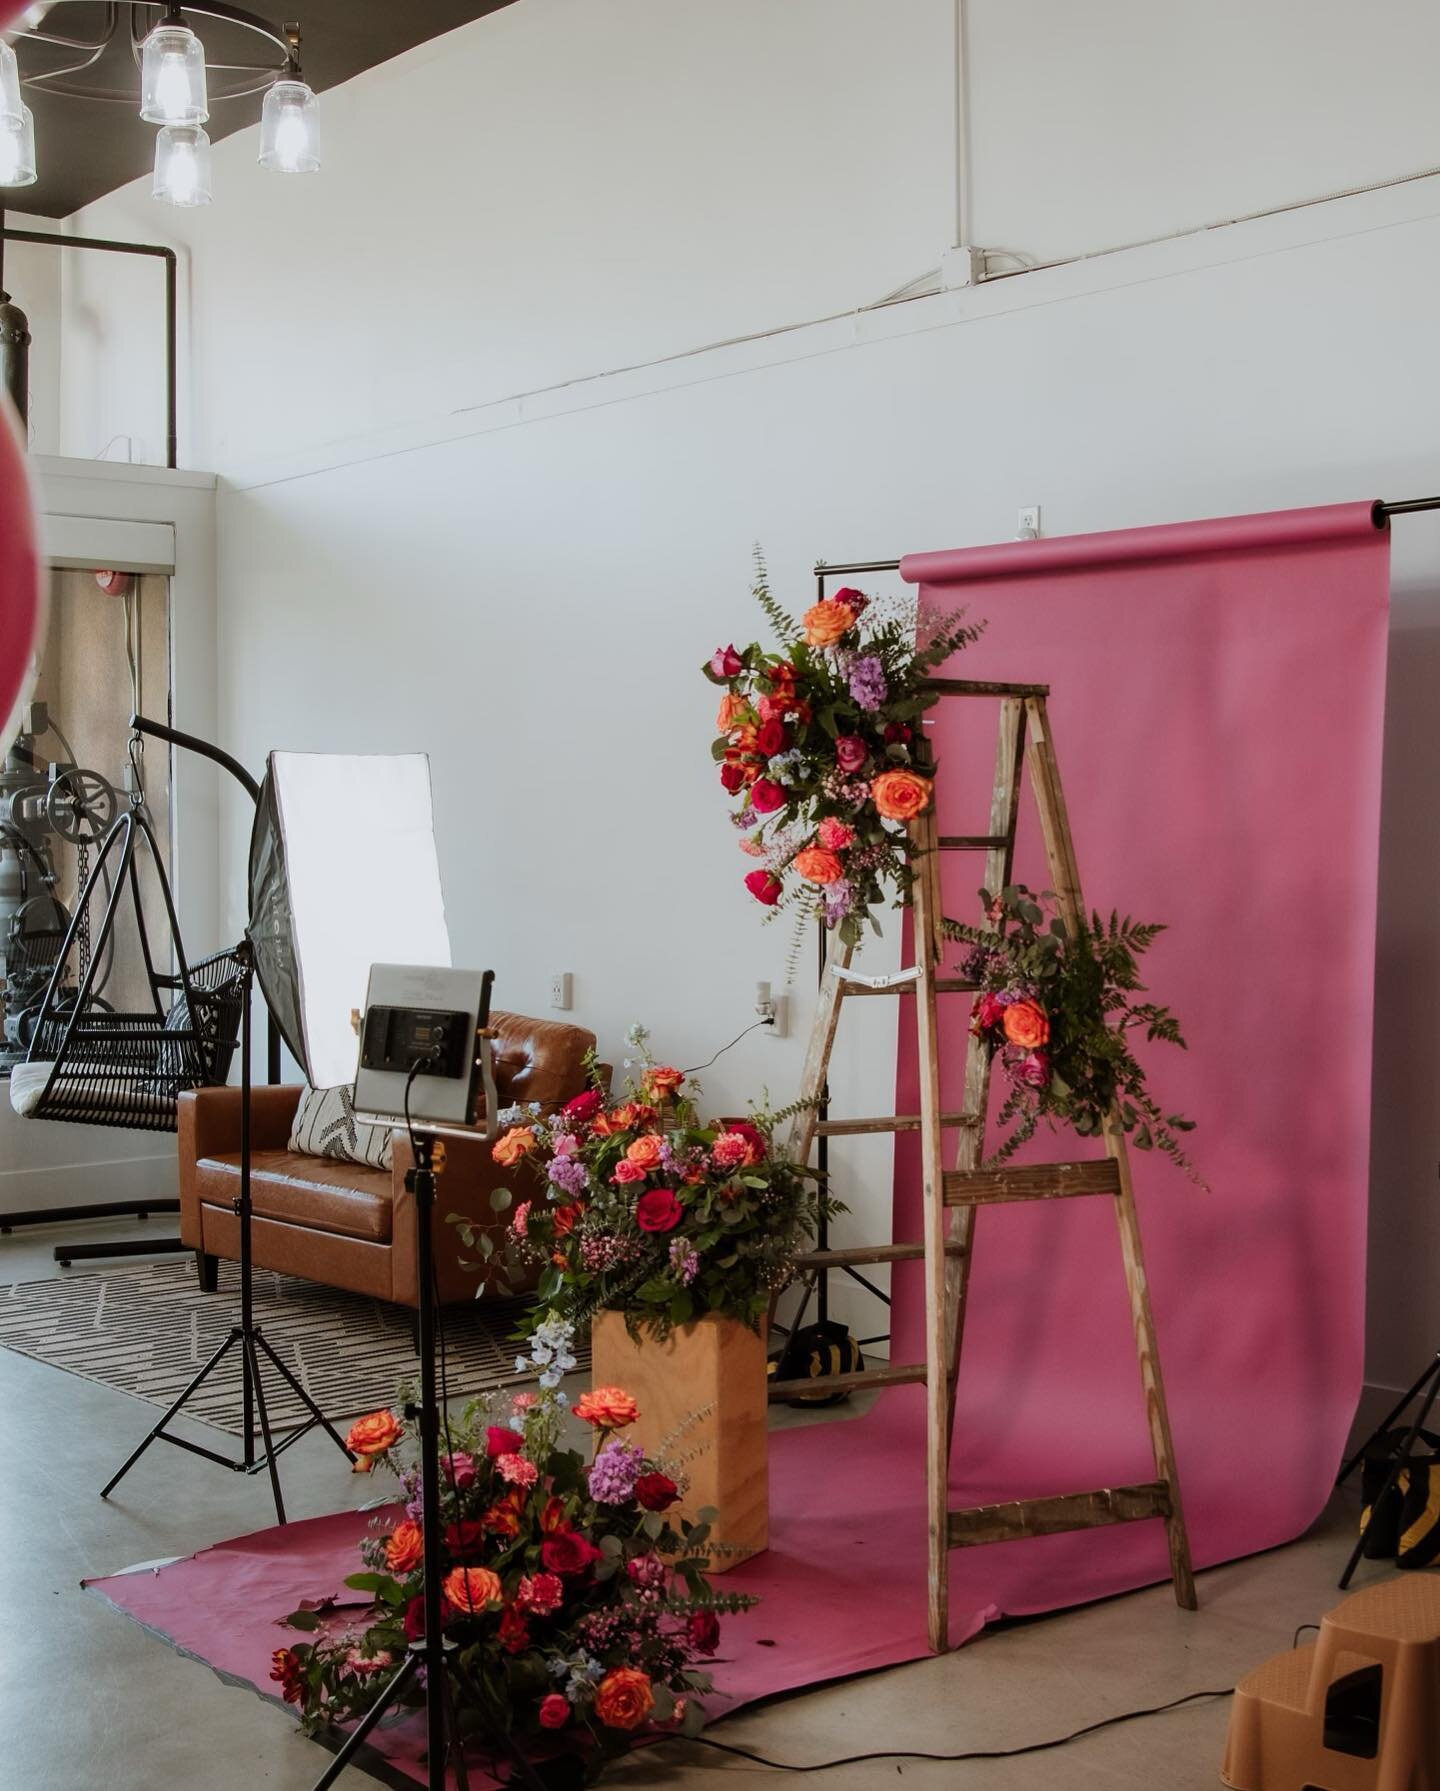 Looking to shoot a photoshoot, video or create content?

Casa Bloom Studios is a creative space in the heart of Downtown Santa Ana. @callecuatrodtsa | @dtsantaana | @travelsantaana 

Studio Amenities: Free WiFi, SmartKey Entry, Kitchenette, Commercia